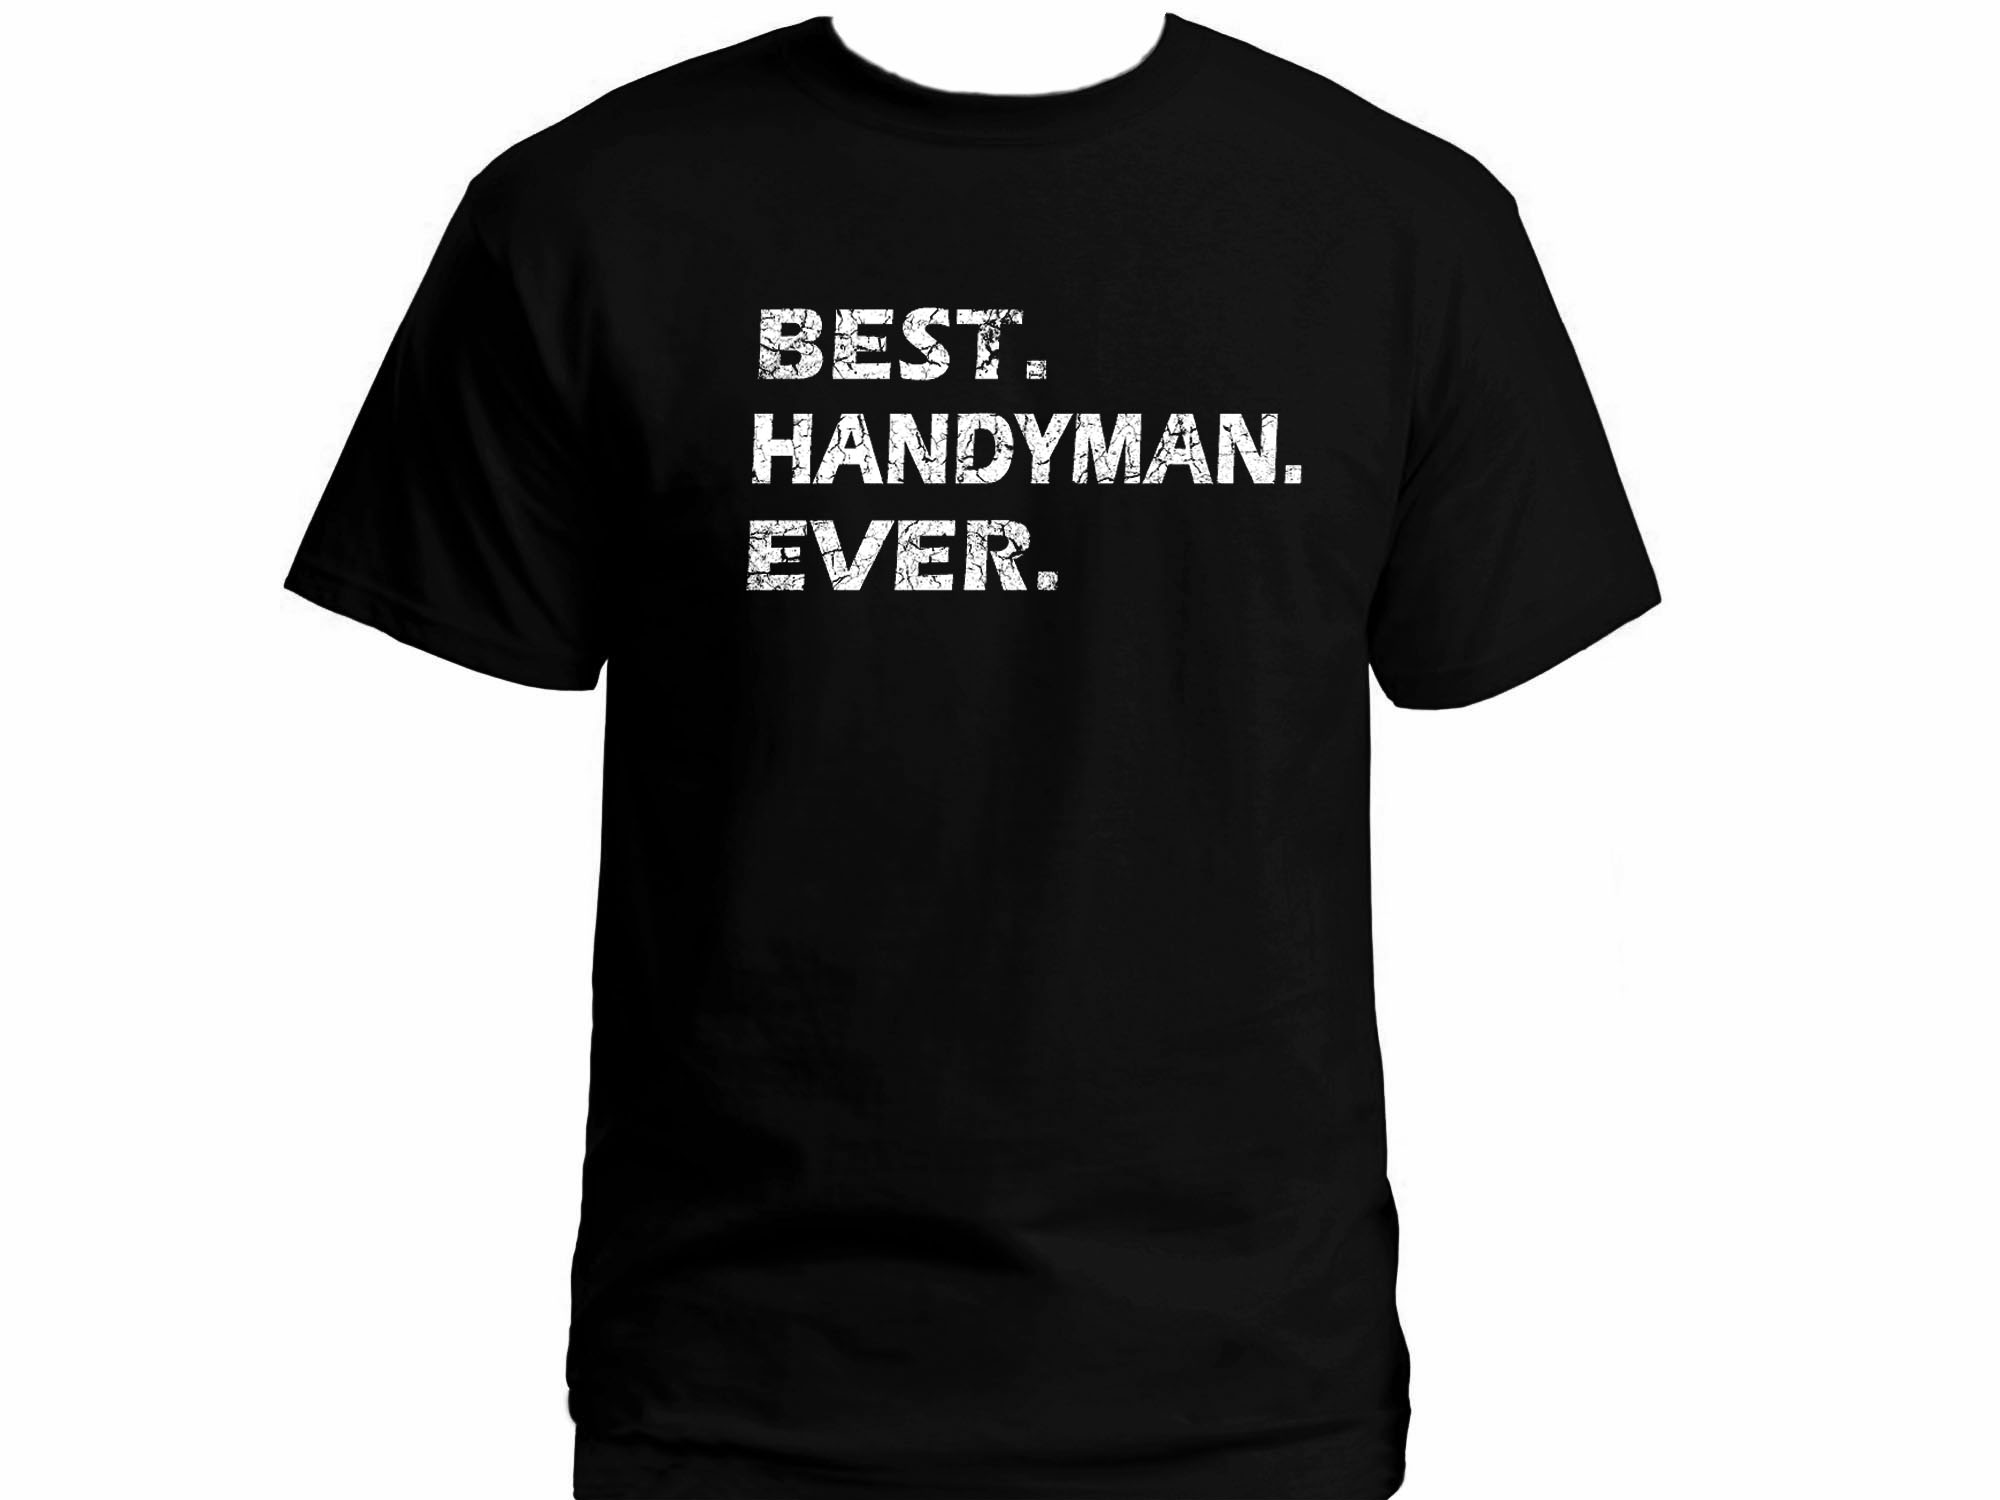 Best handyman ever distressed print t-shirt